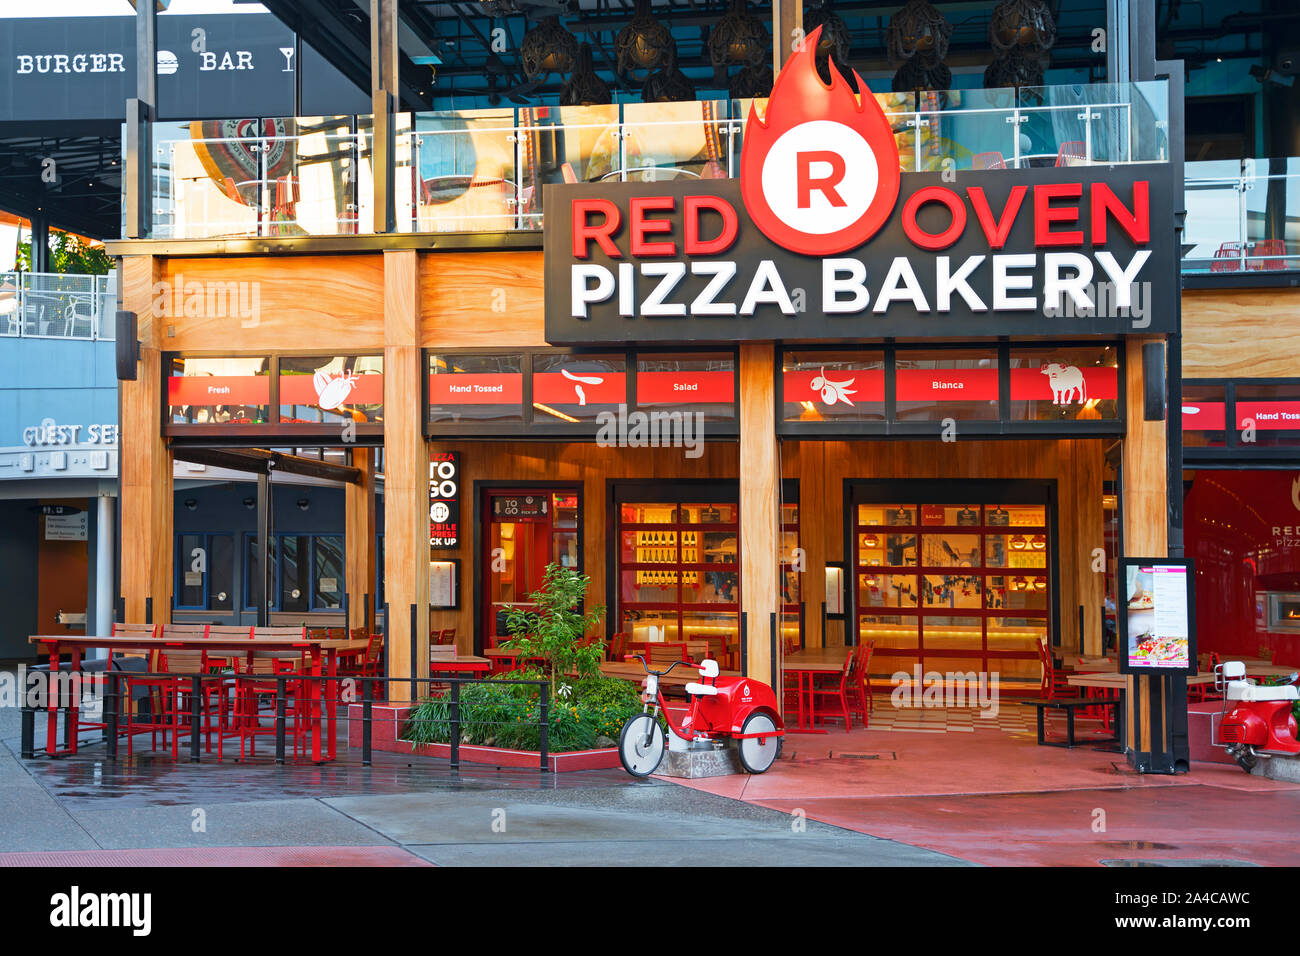 Red Oven Pizza Bakery, Pizzeria Restaurant at CityWalk, Universal Studios Resort, Orlando, Florida, USA Stock Photo